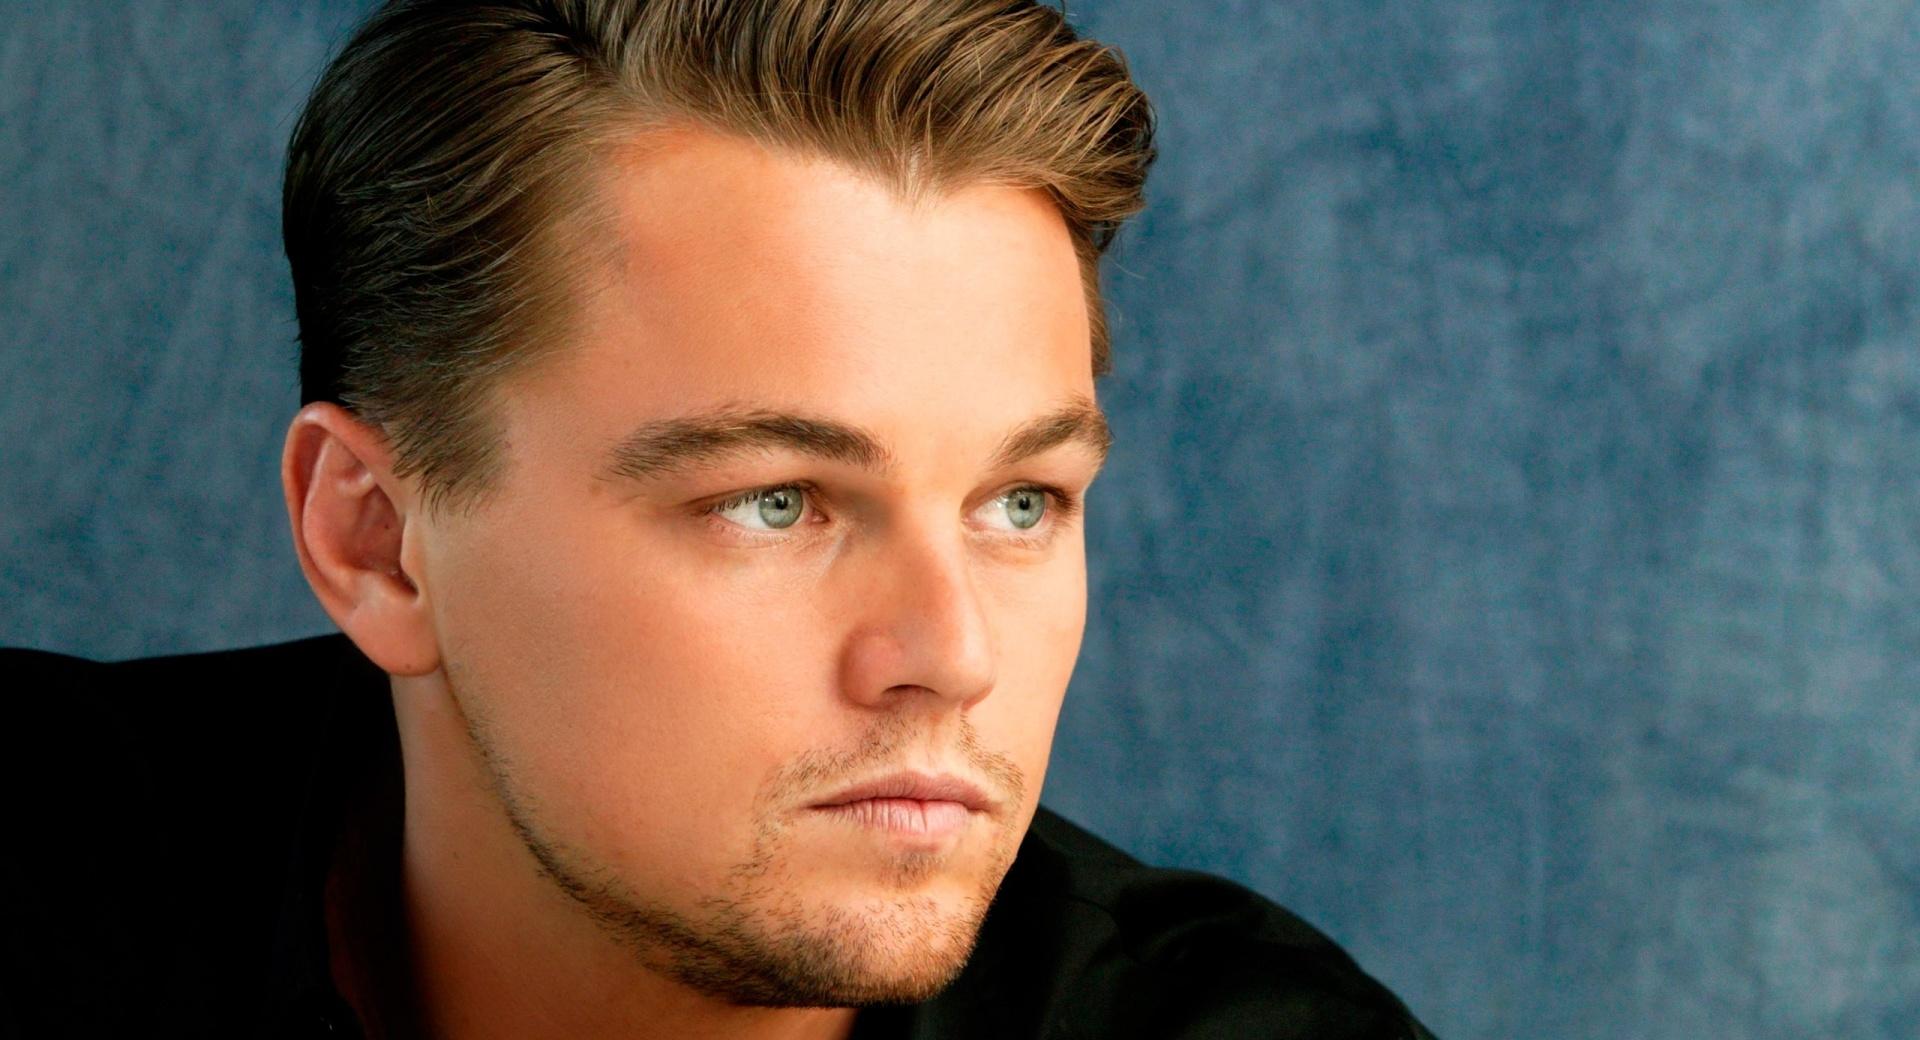 Leonardo DiCaprio Portrait wallpapers HD quality